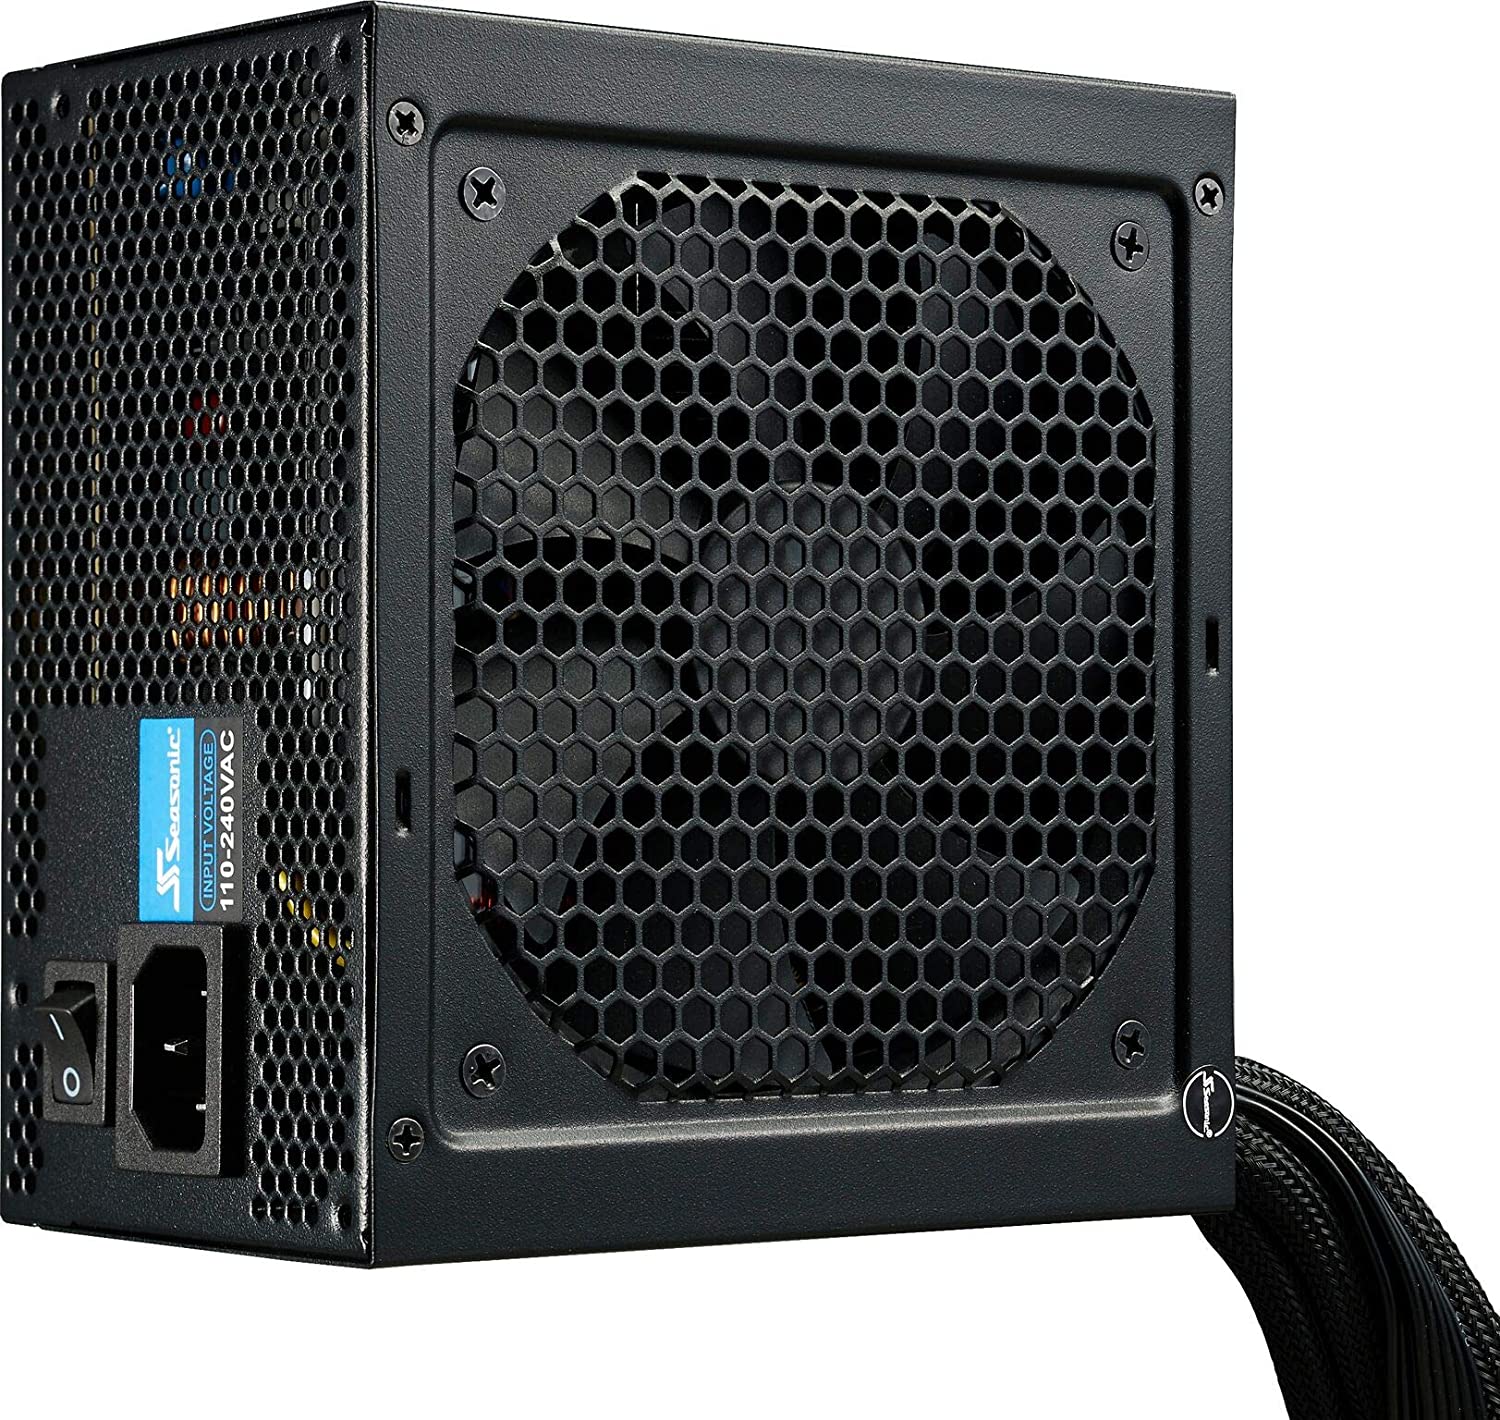 Seasonic S12III 650 W 80+ Bronze, ATX12V & EPS12V, Direct Output, Smart & Silent Fan Control Power Supply (650 SSR-650GB3)